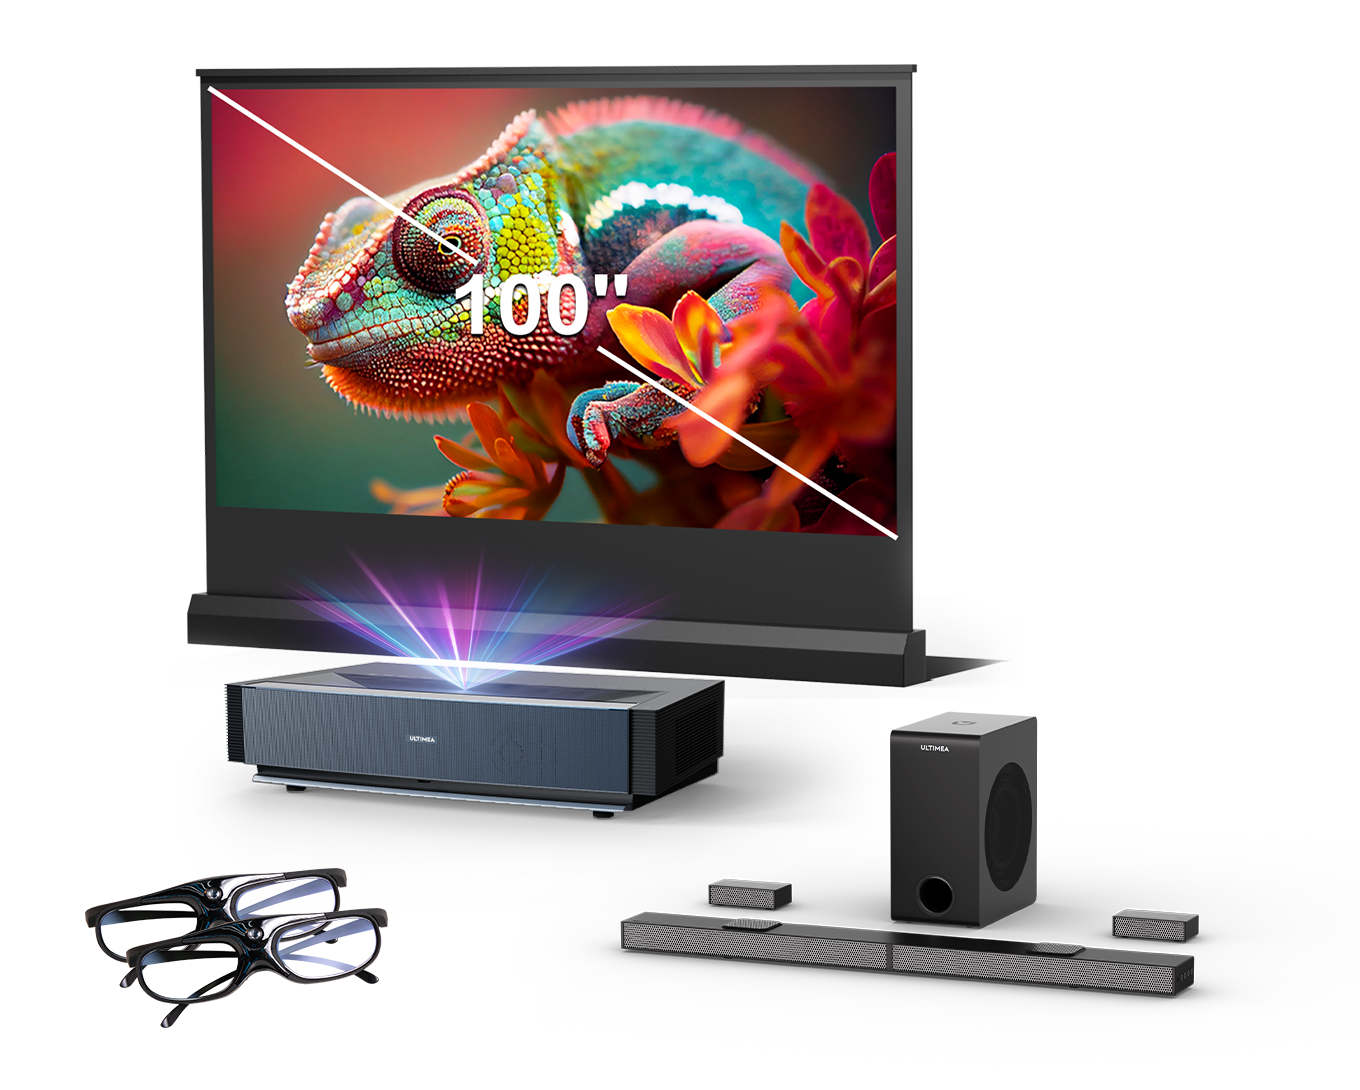  ULTIMEA Barra de sonido Dolby Atmos 5.1, potencia máxima de 410  W, barras de sonido envolvente para Smart TV con subwoofer, sistema de  sonido envolvente 3D para TV, cine en casa